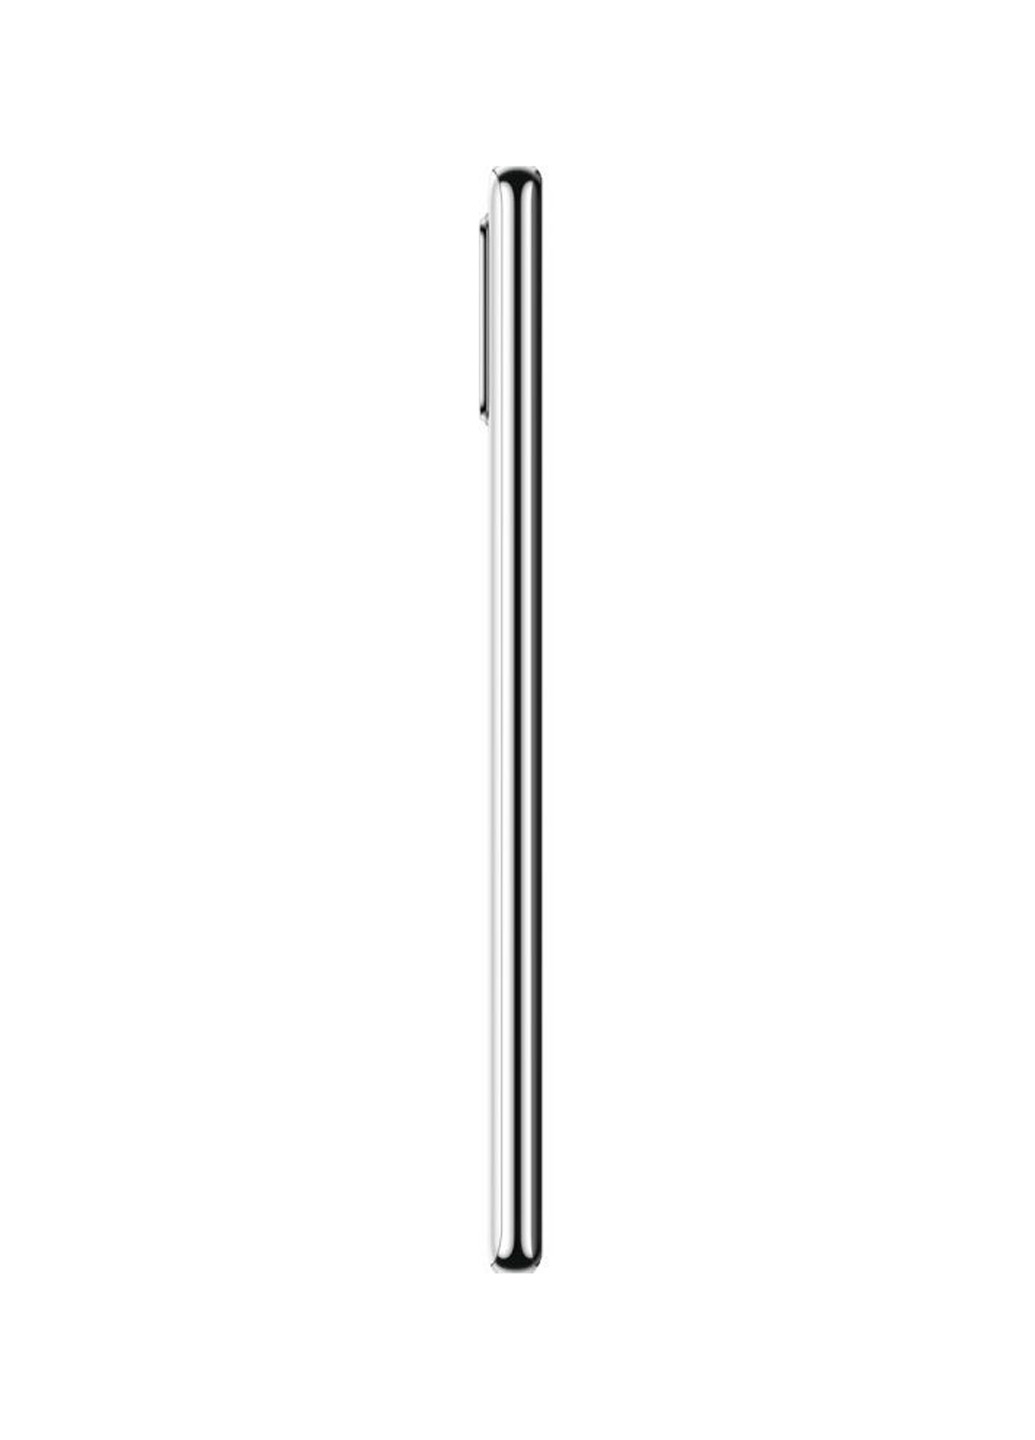 Смартфон P30 Lite 4 / 128GB Pearl White (MAR-Lх1A) Huawei p30 lite 4/128gb pearl white (mar-lх1a) (130359124)